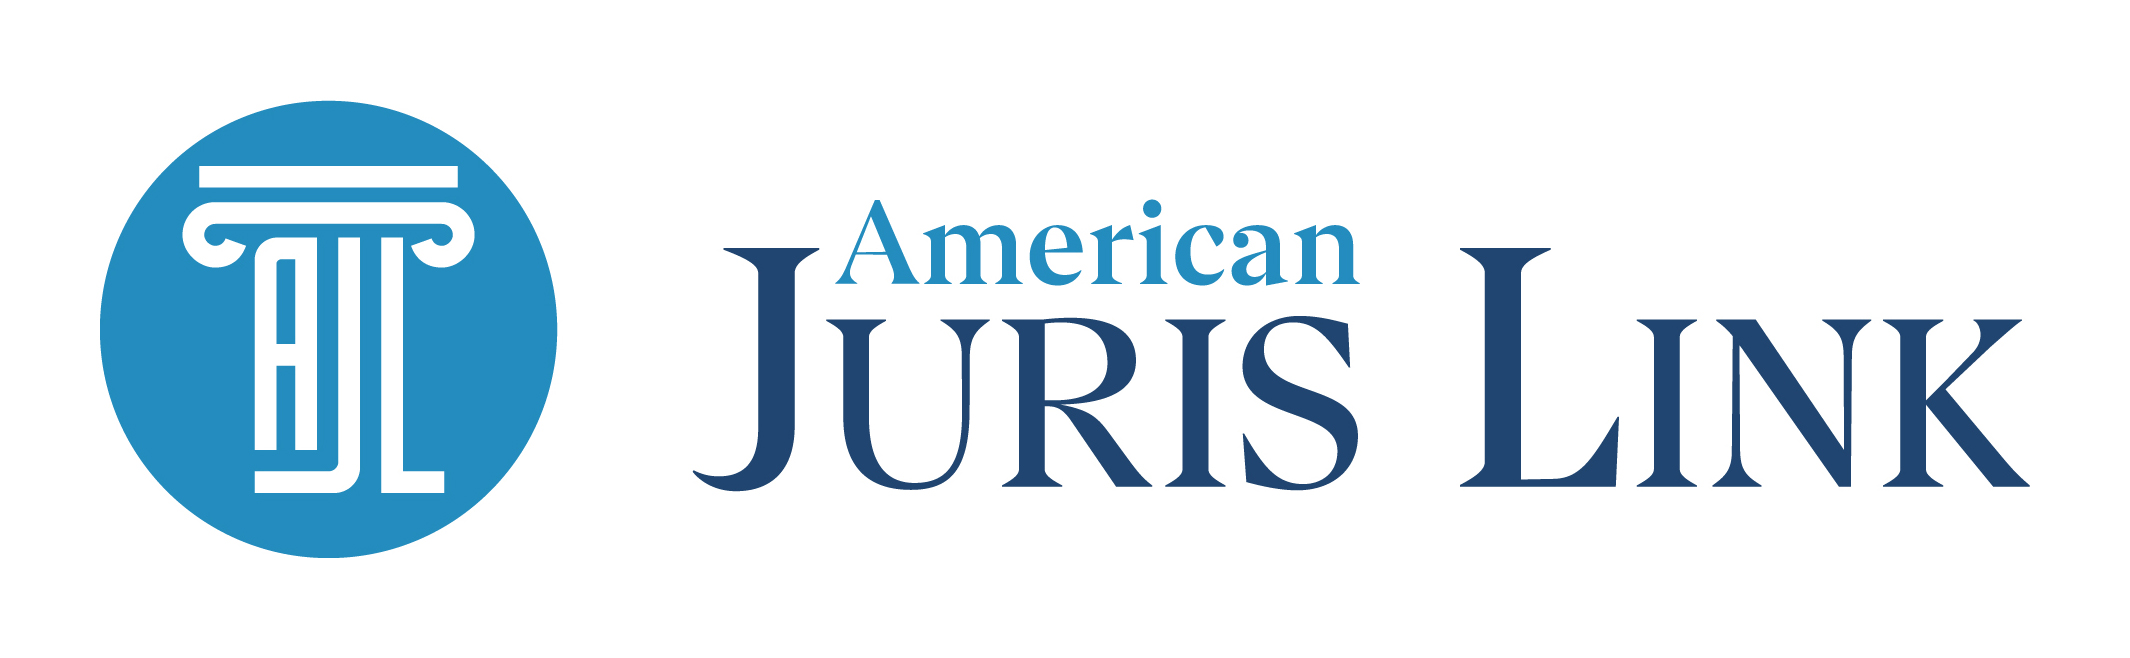 American Juris Link logo